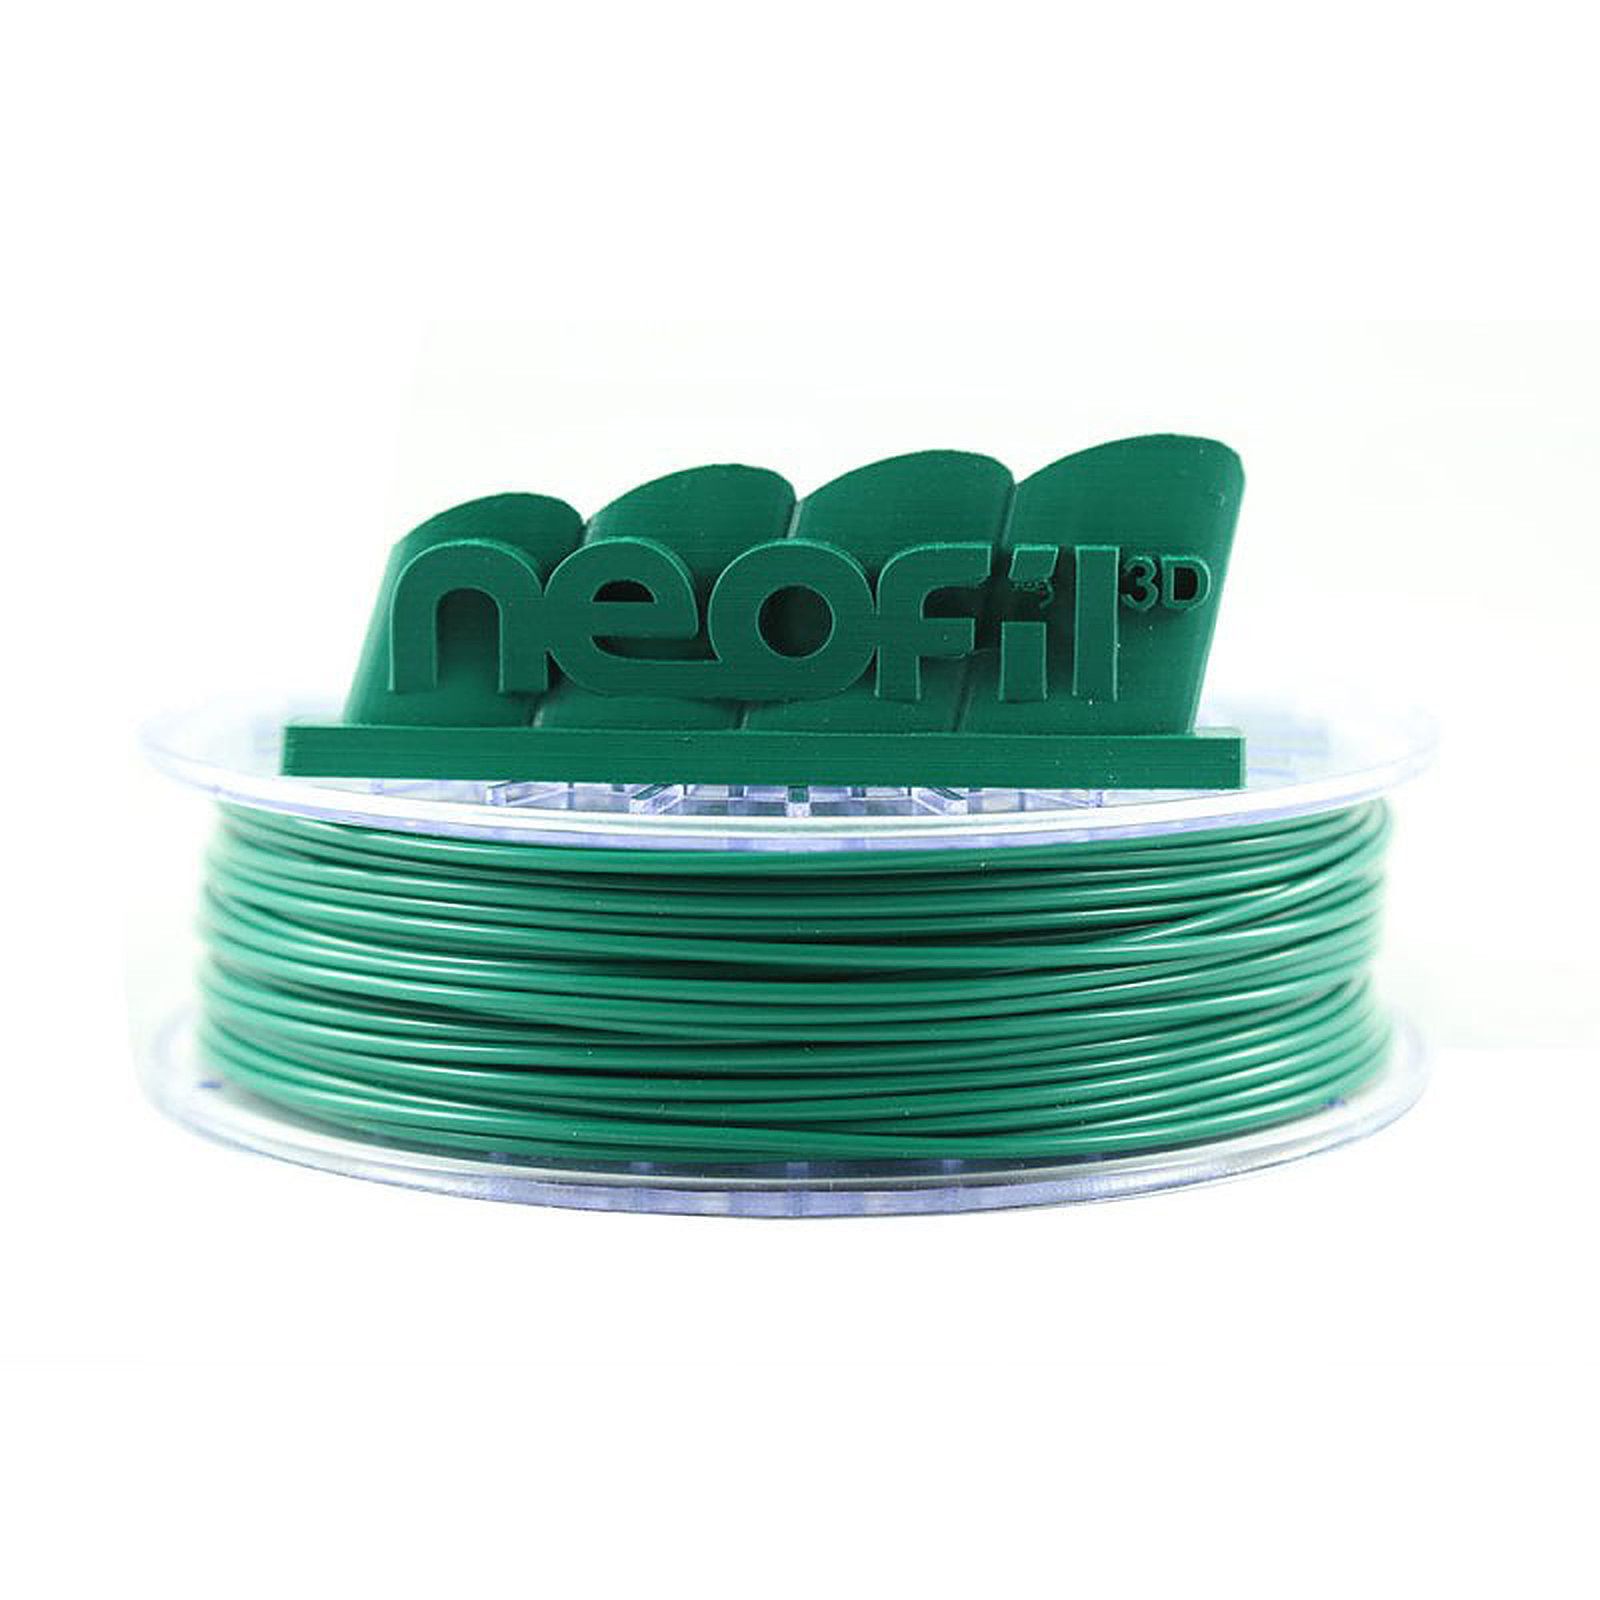 Neofil3D Bobine PLA 2.85mm 750g - Vert fonce - Filament 3D Neofil3D